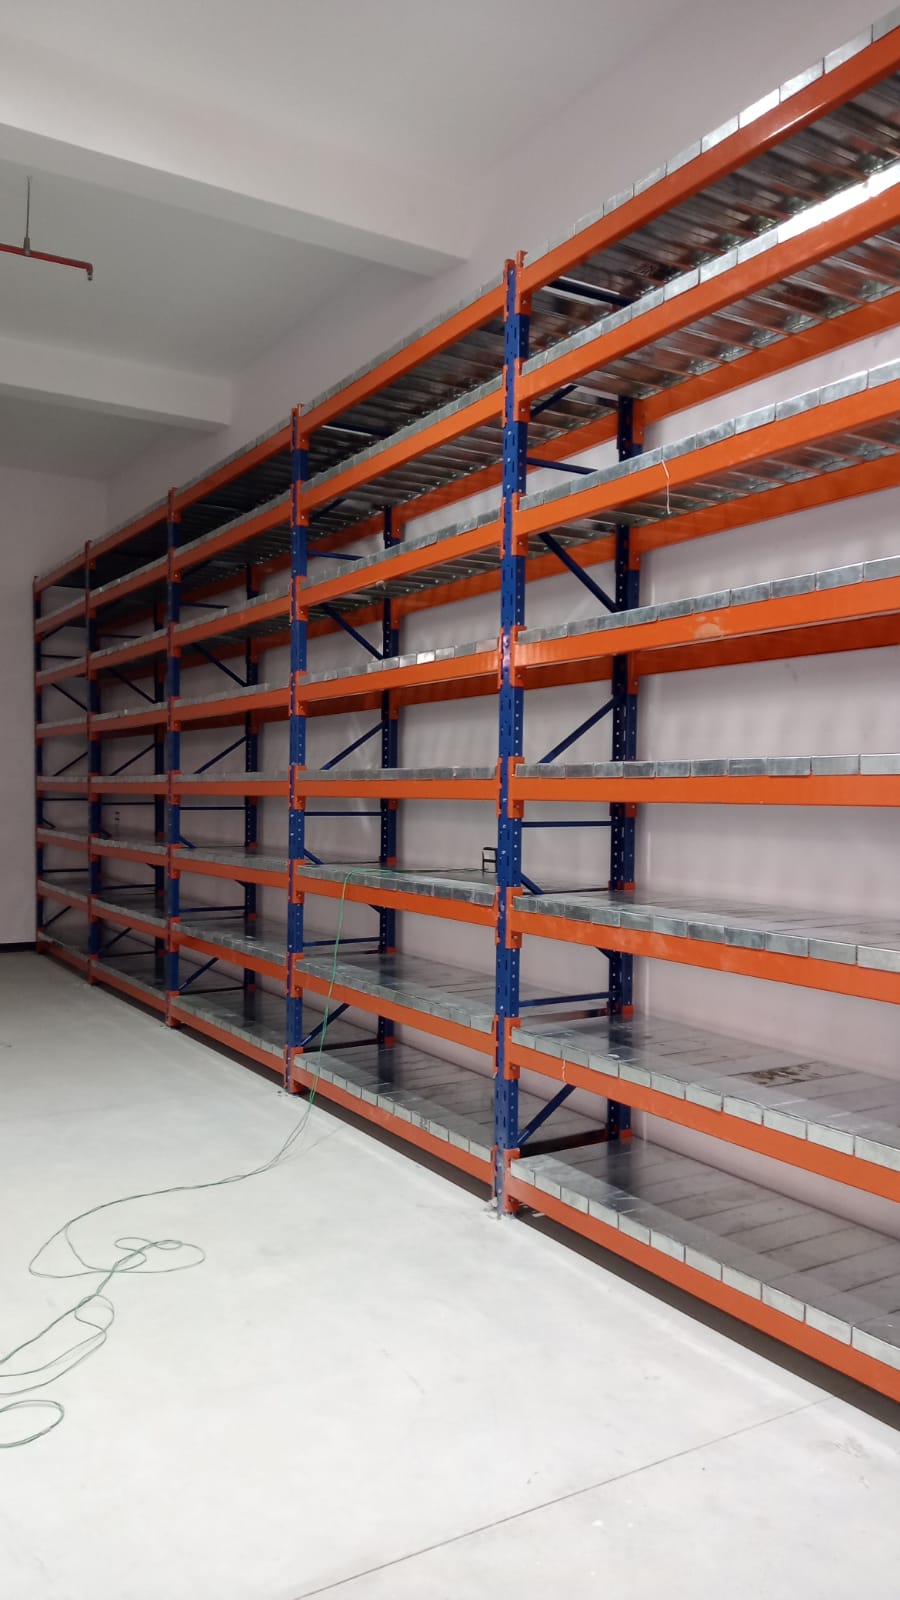 How Pallet Racks Adapt to Varied Warehouse Environments?